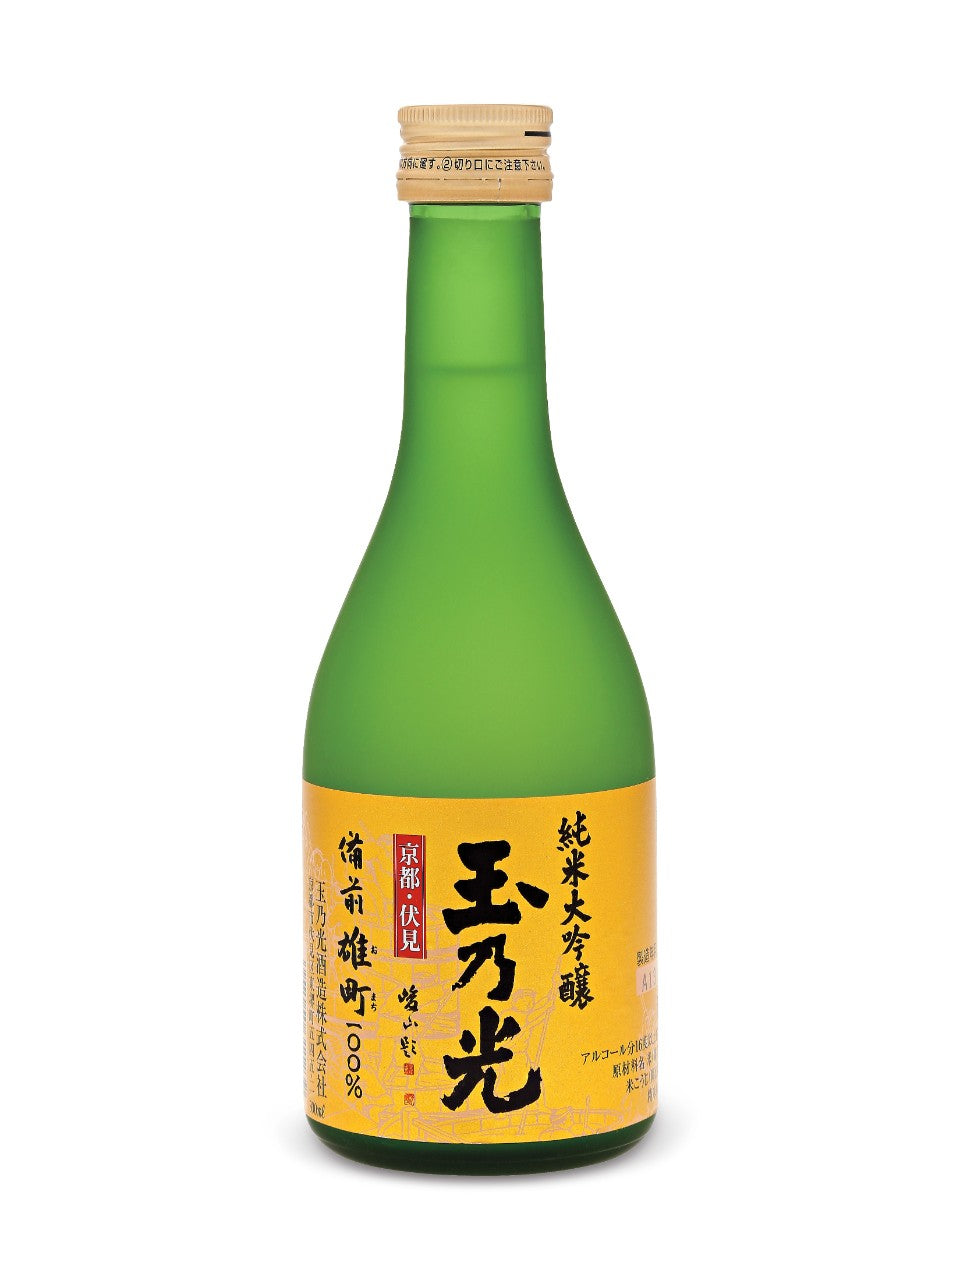 Tamanohikari Omachi Junmai Daiginjo  300 mL bottle  VINTAGES